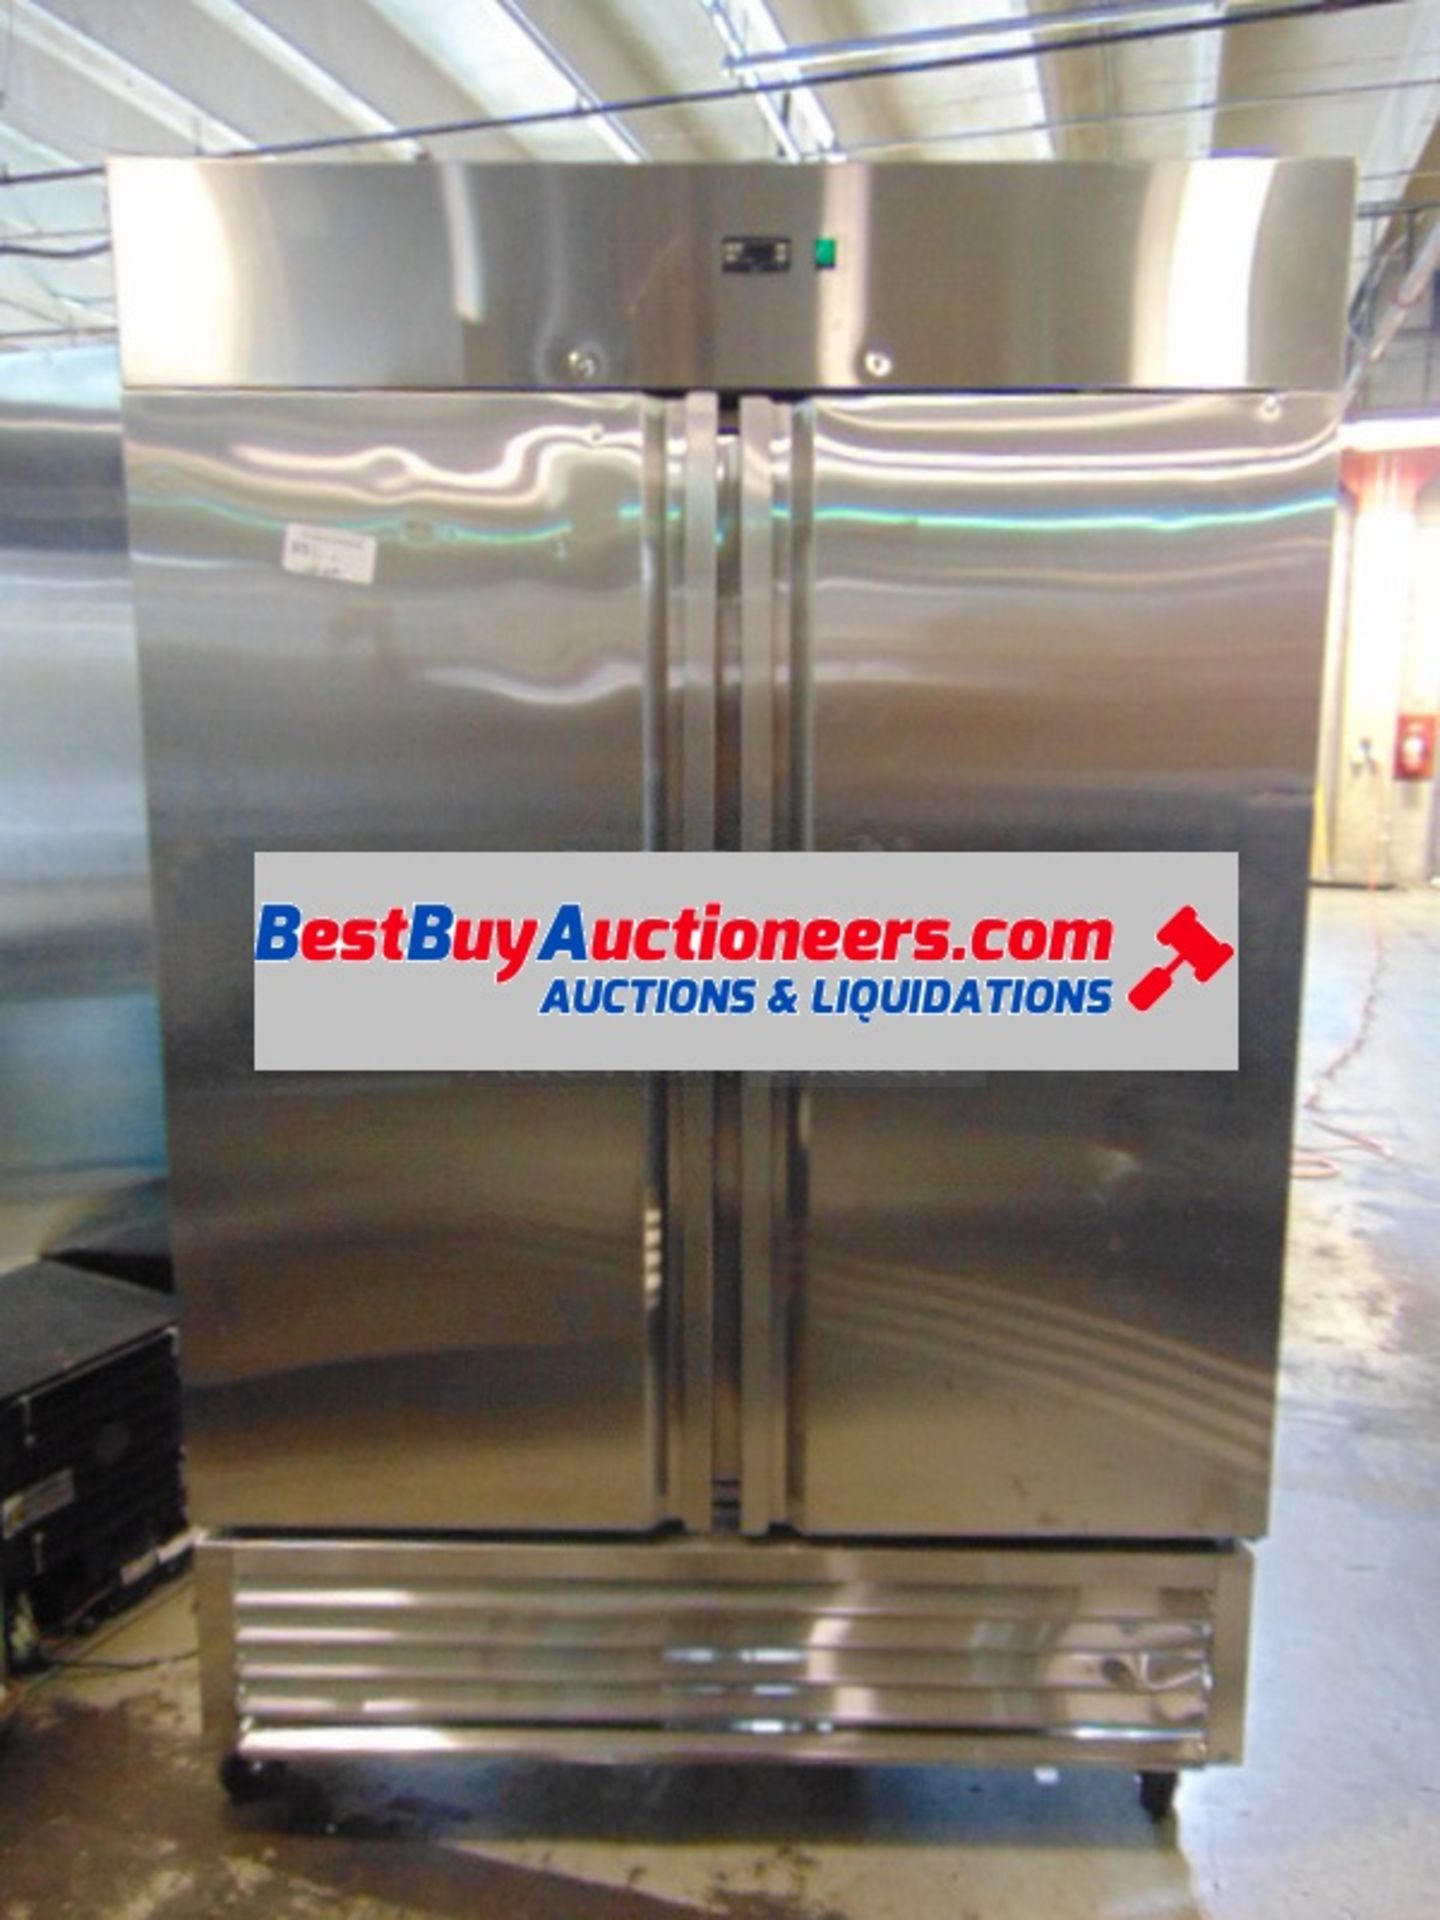 SG Merchandising Model DD49-SDSS Commercial Stainless Steel Electric Double Door Freezer On